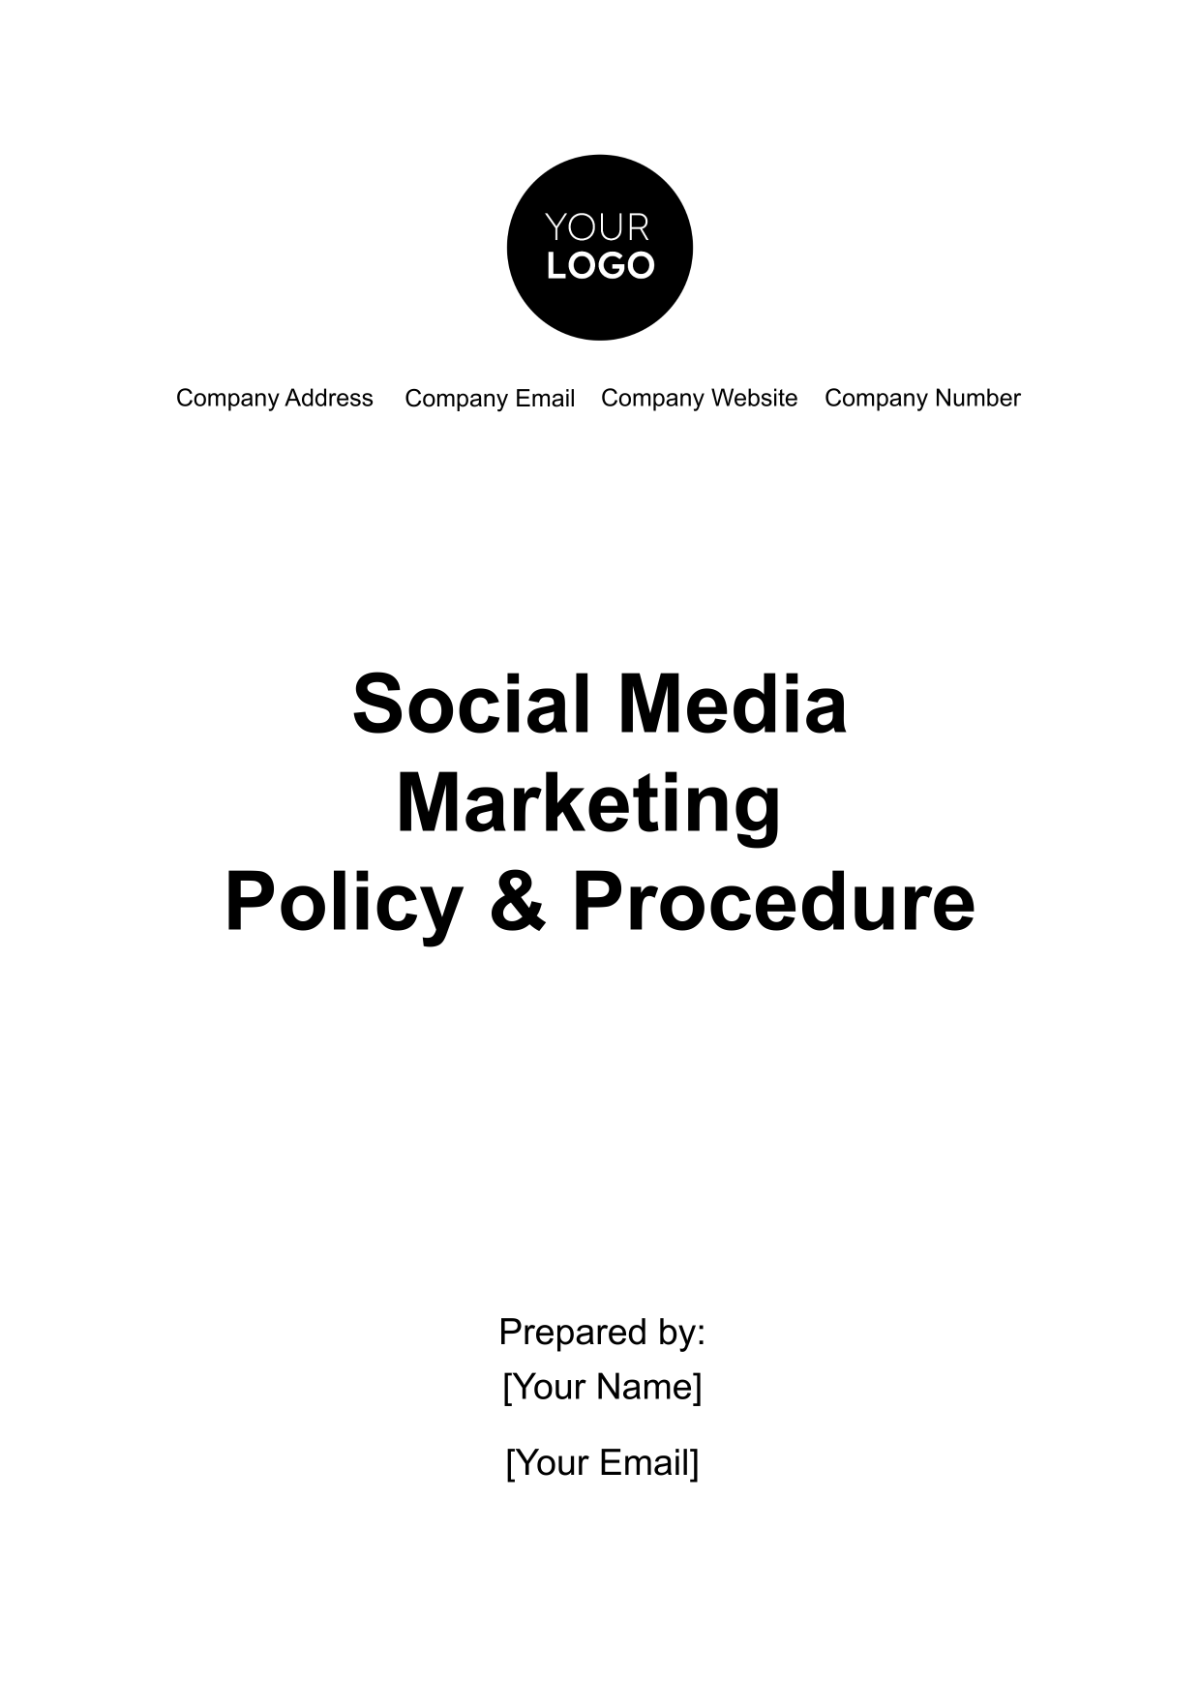 Social Media Marketing Policy & Procedure Template